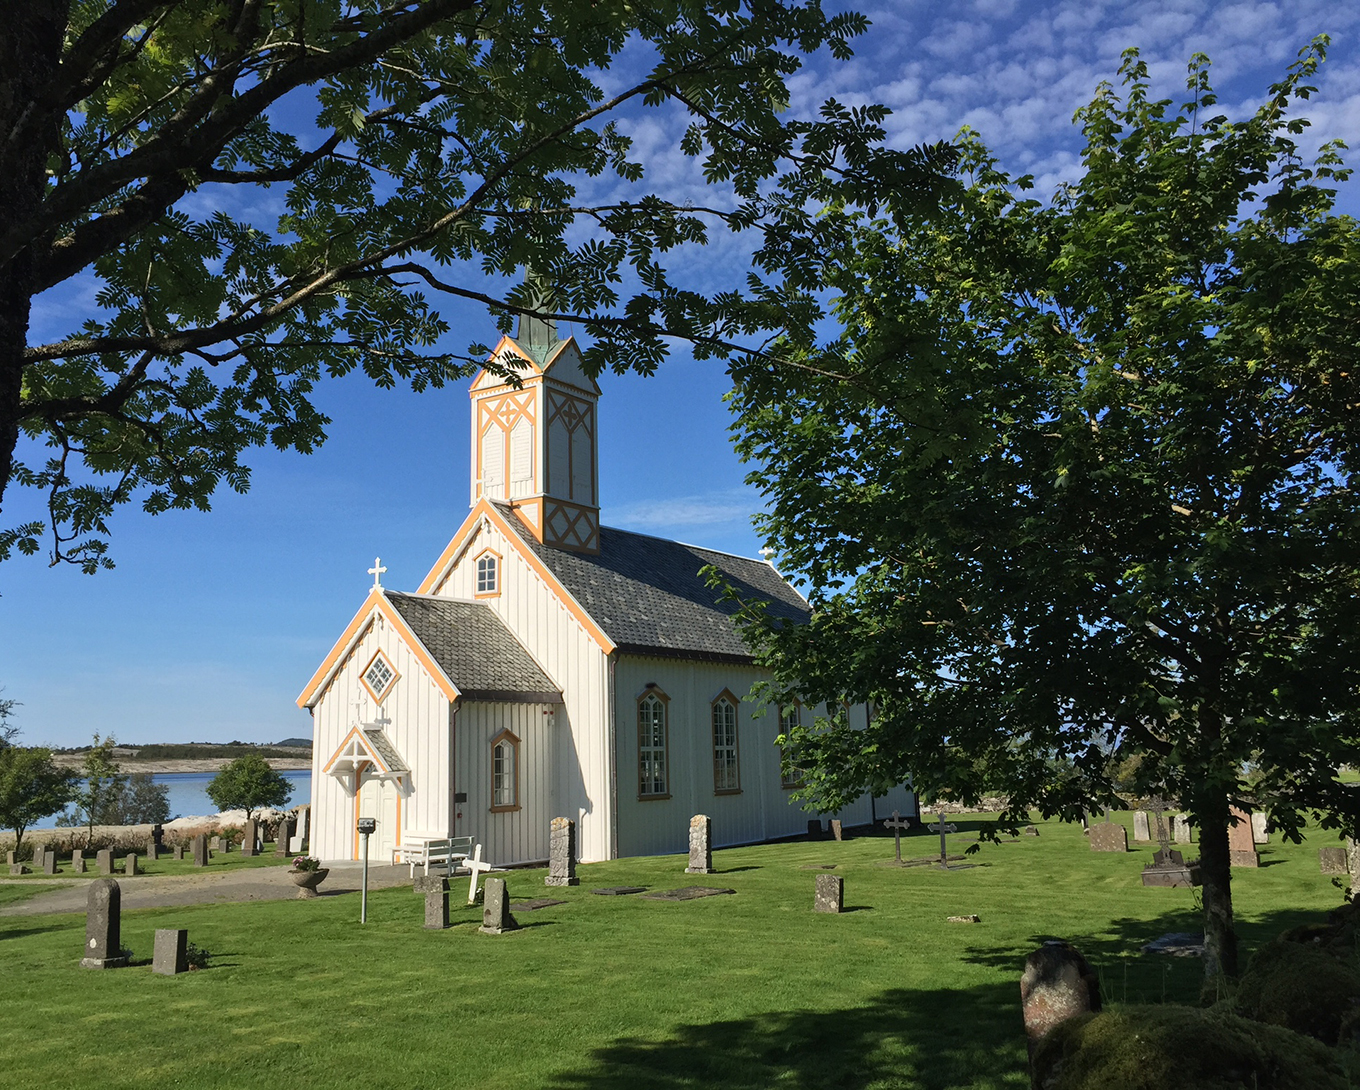 Vevelstad Church